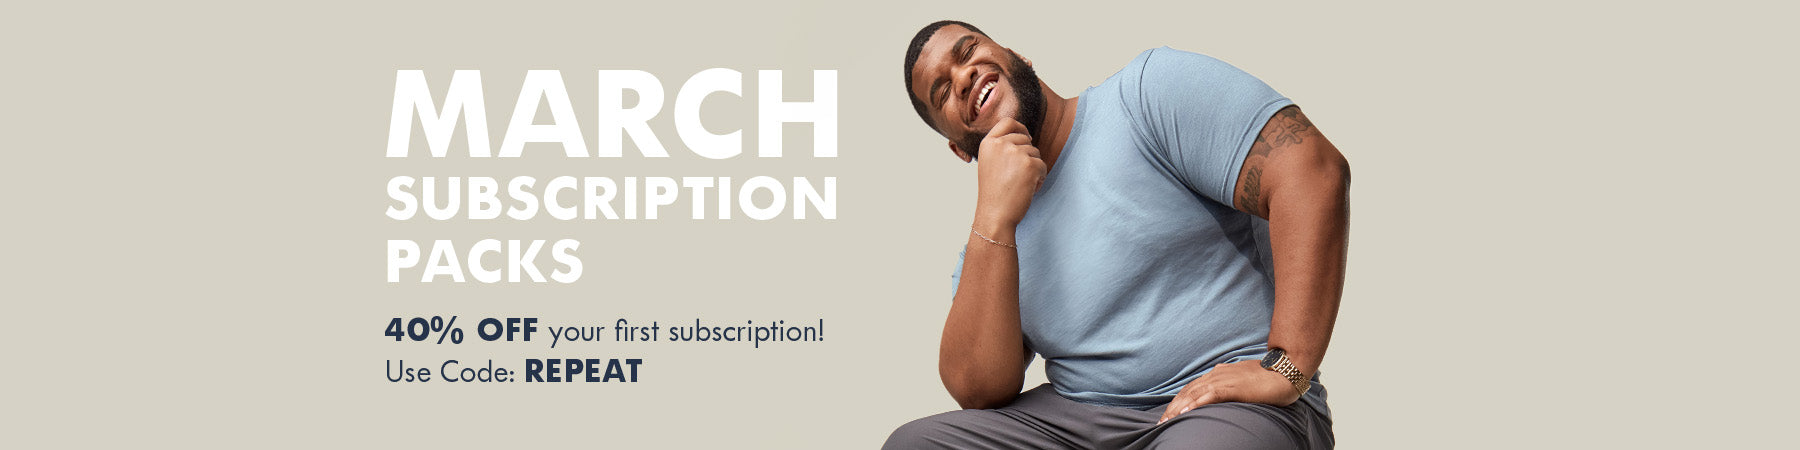 March Subscription Packs | Fresh Clean Threads